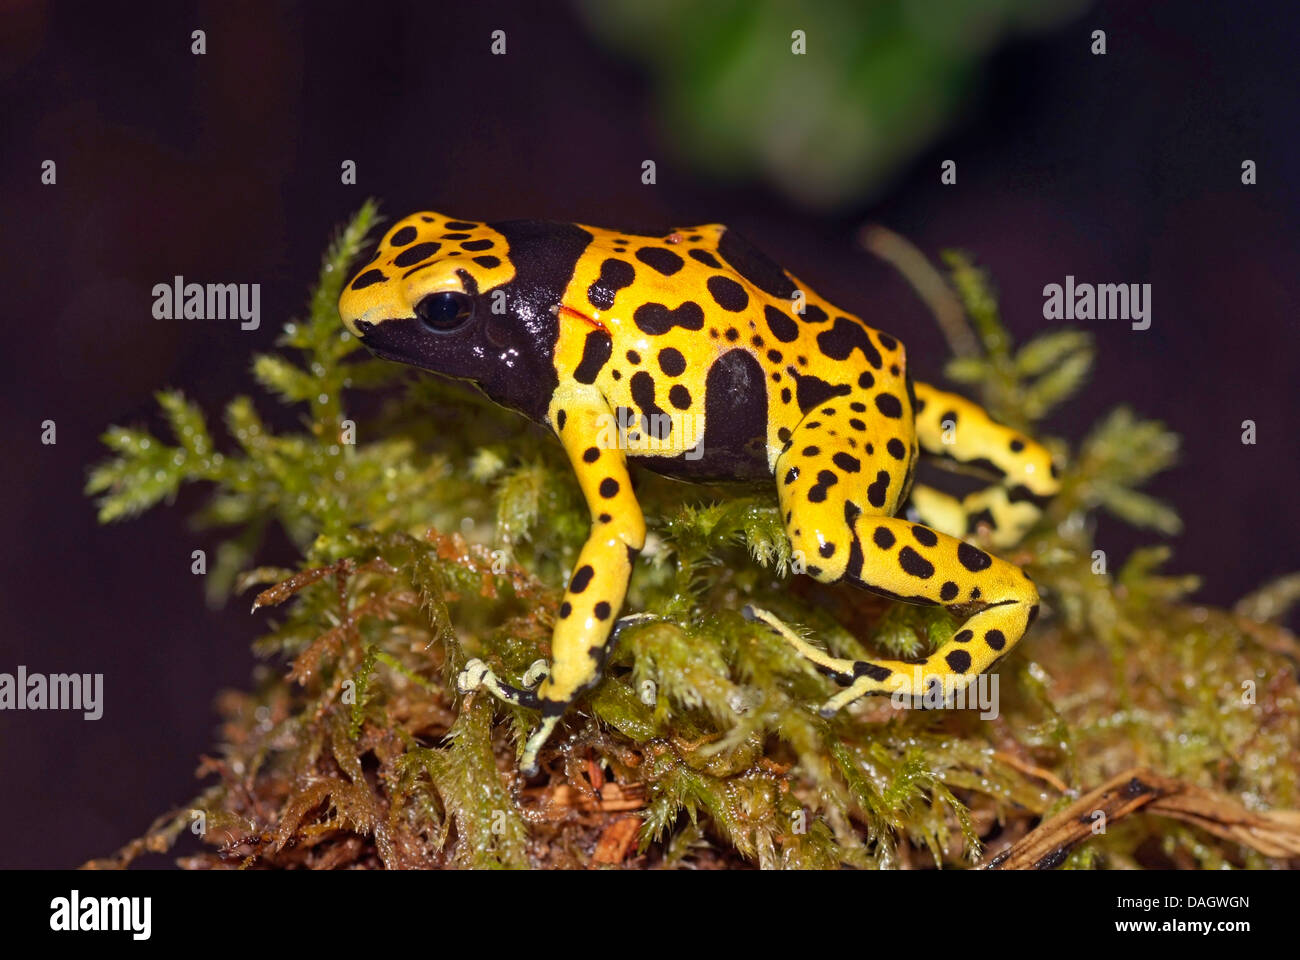 yellow-banded poison dart frog, yellow banded poison frog, bumble bee poison arrow frog (Dendrobates leucomelas), morph Bolivar, KoeZ708 Stock Photo